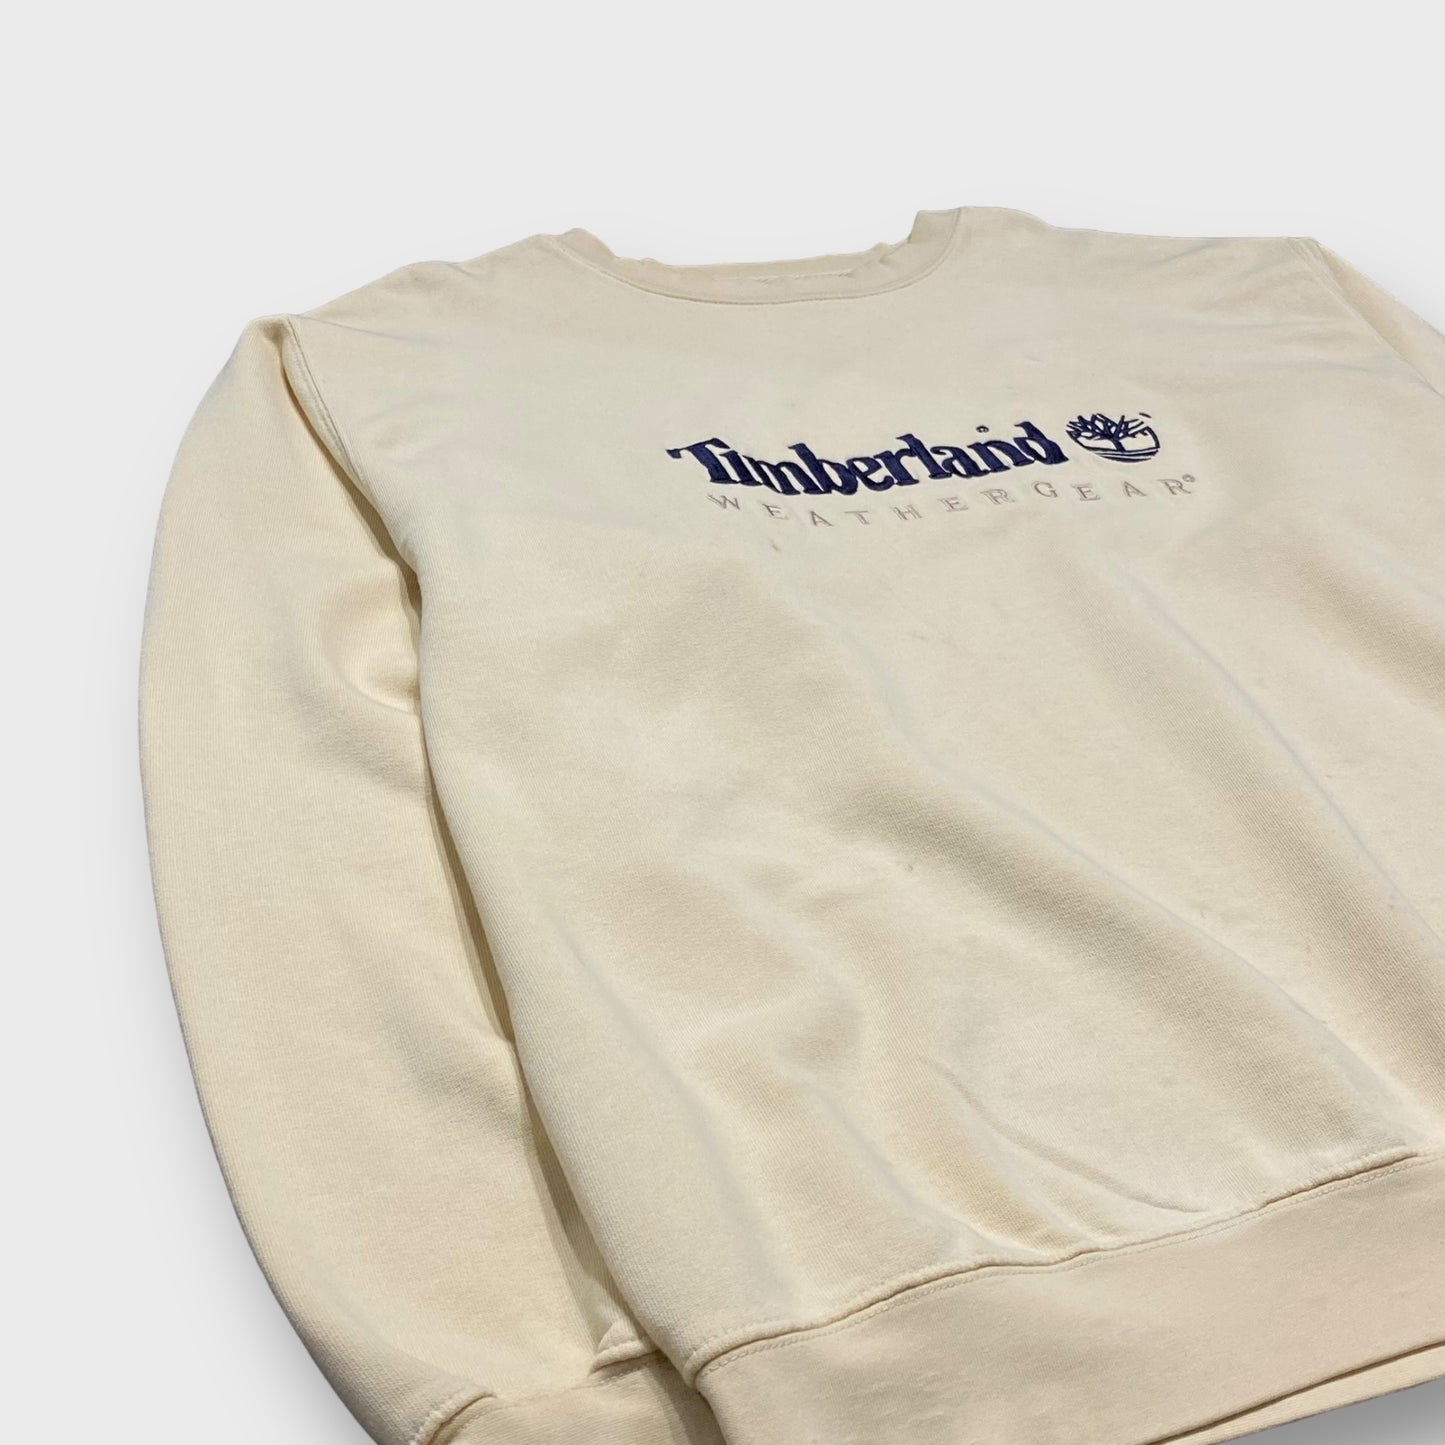 90's "Timberland" Logo design sweat